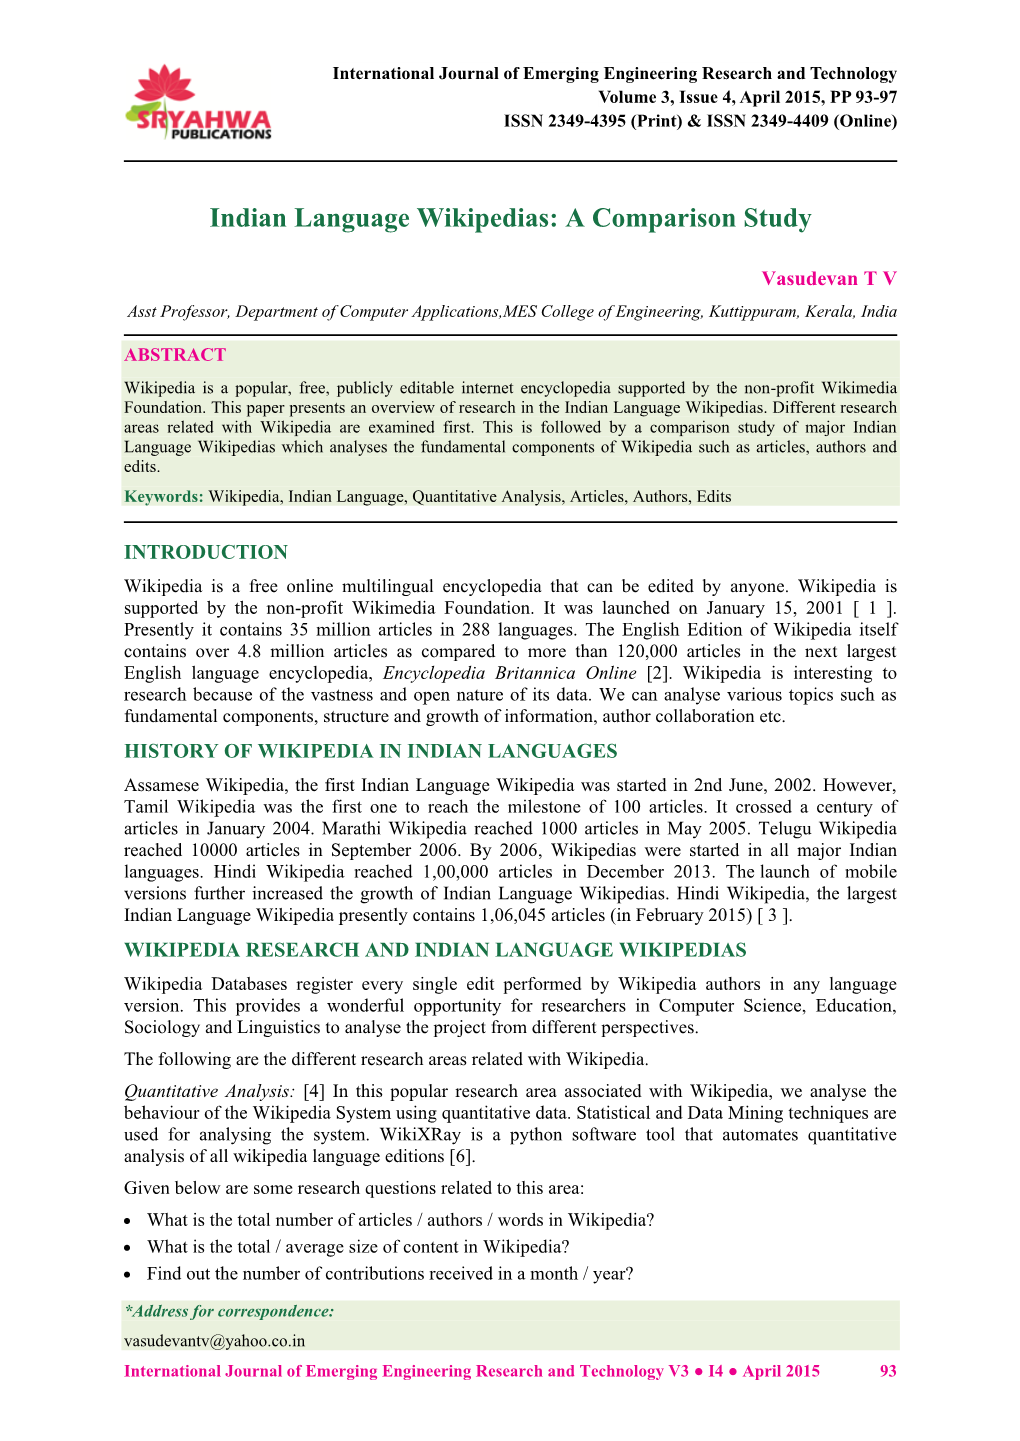 Indian Language Wikipedias: a Comparison Study